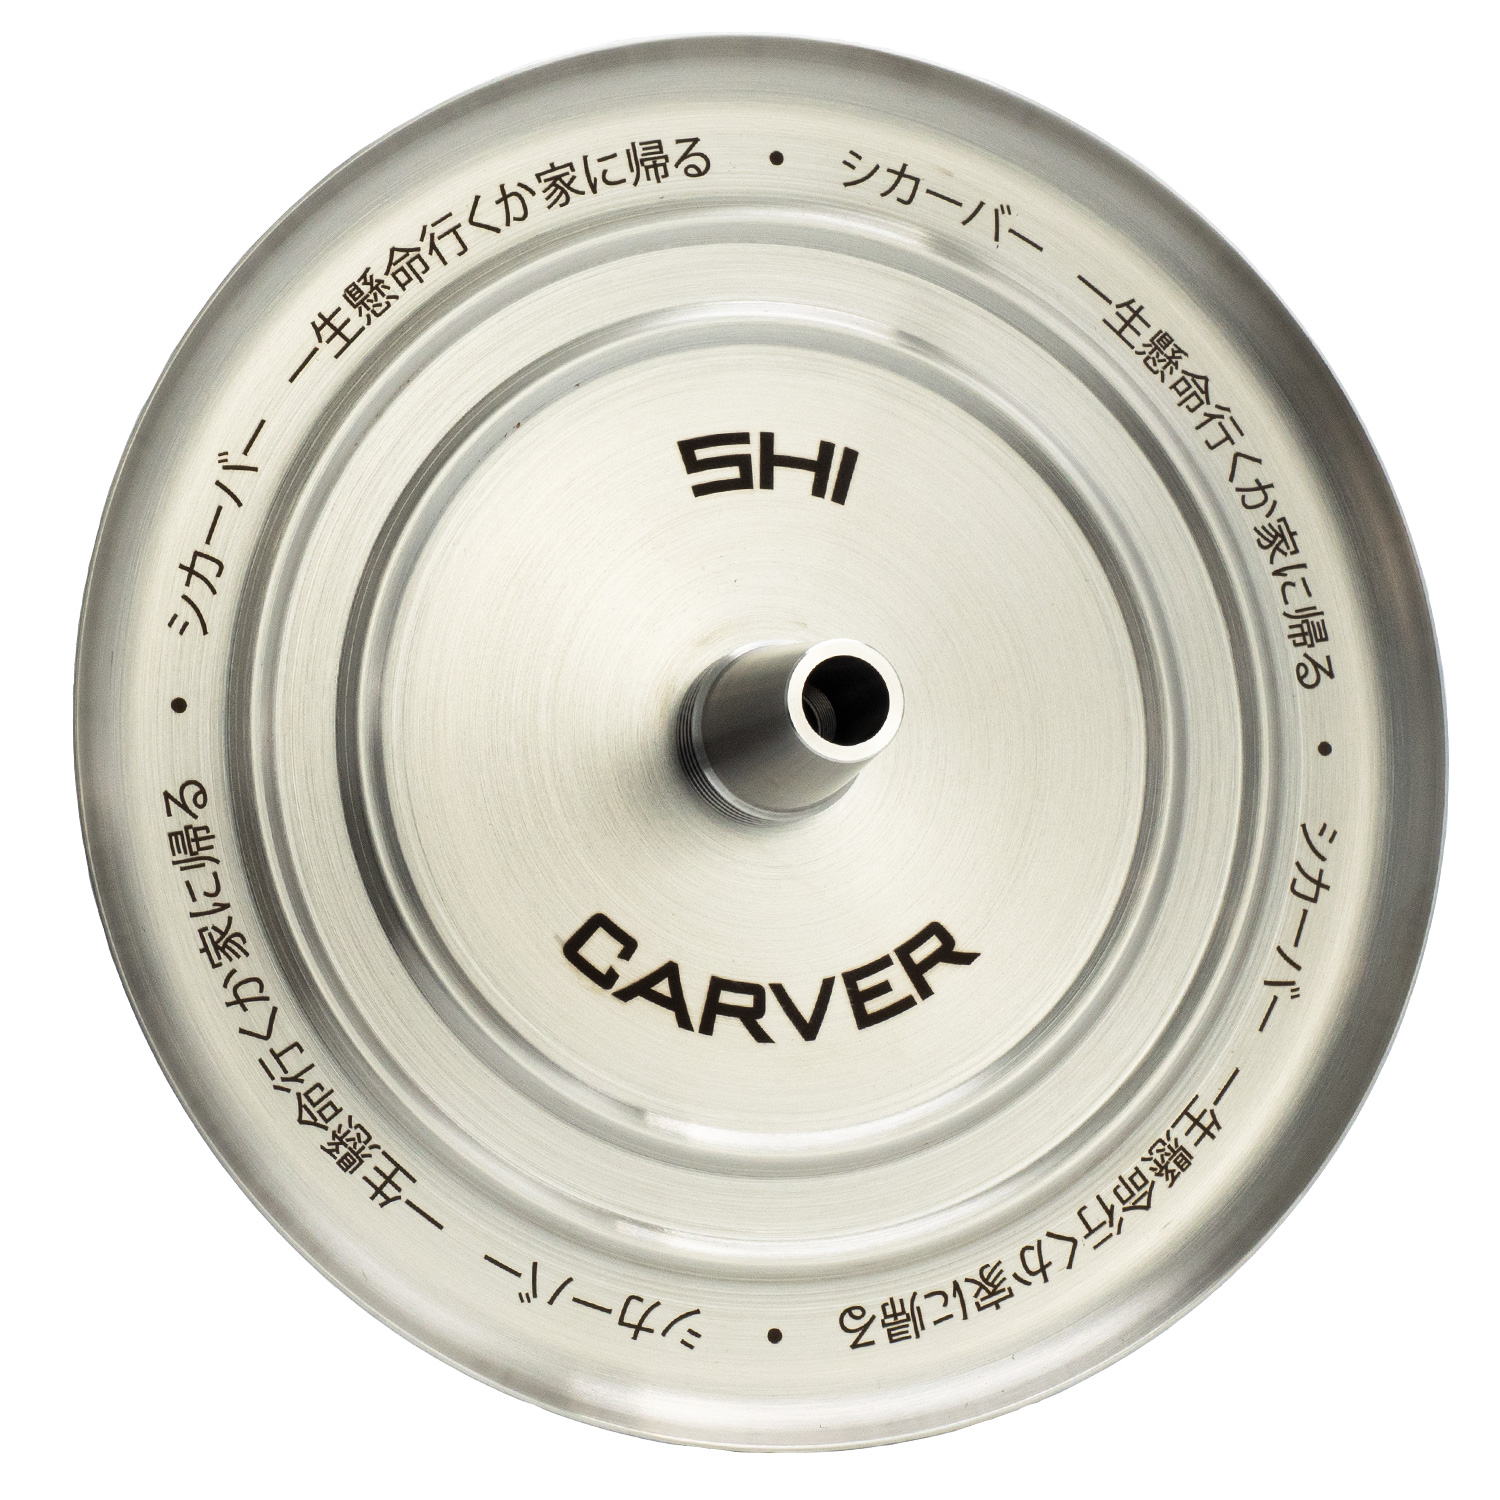 Shi Carver | Cybertank | Red Black White